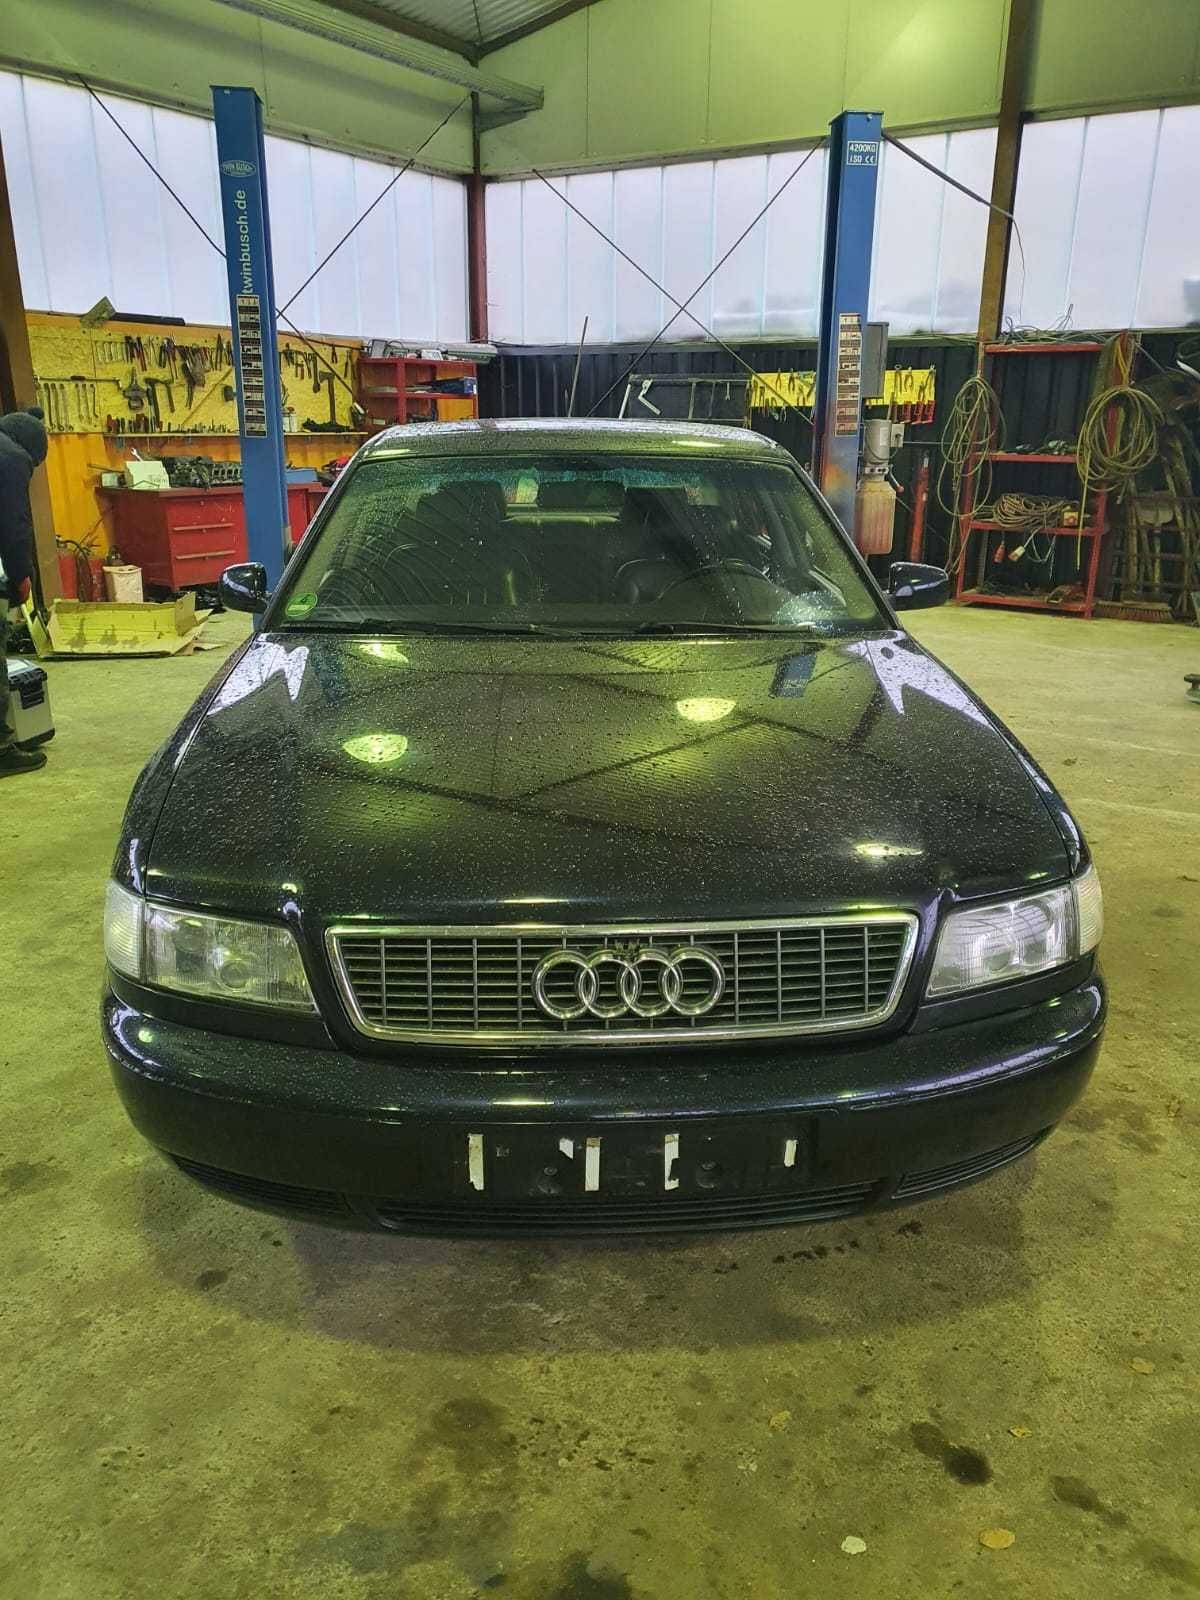 Audi a8 D2 1997 год  3.7 двс Ауди а8 д2 акпп quattro